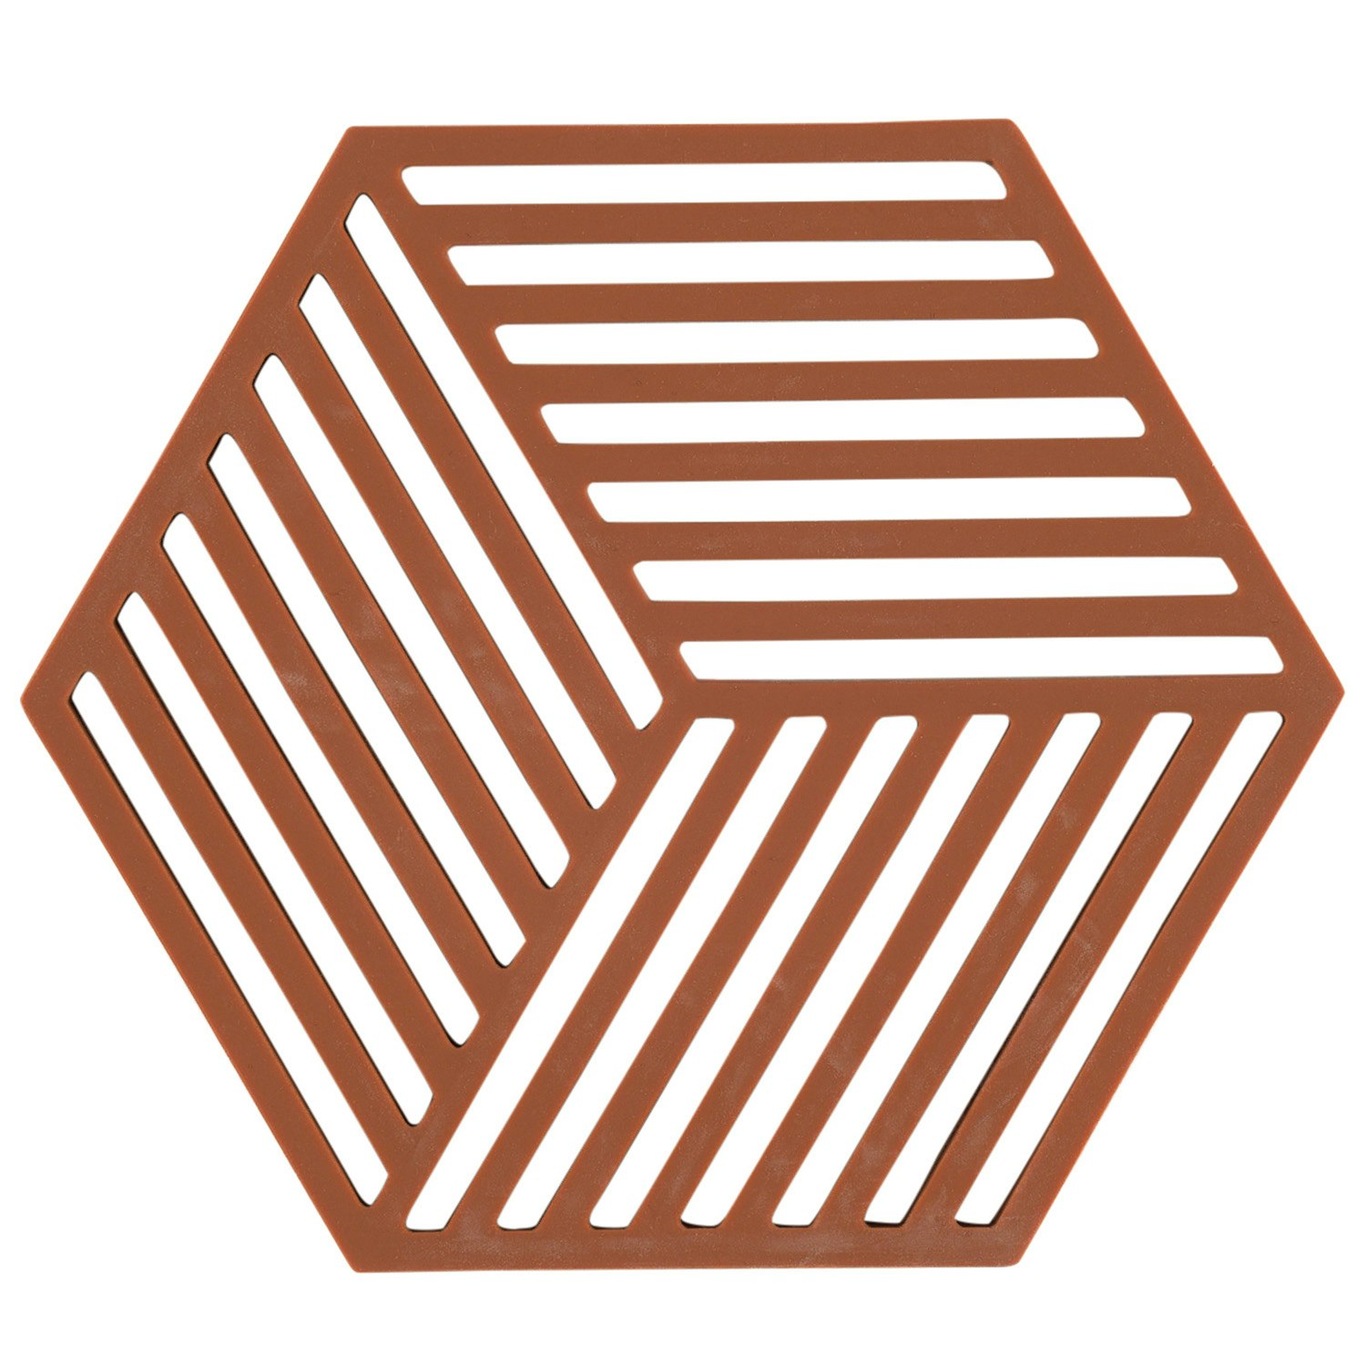 Hexagon Grytunderlägg, Terrakotta